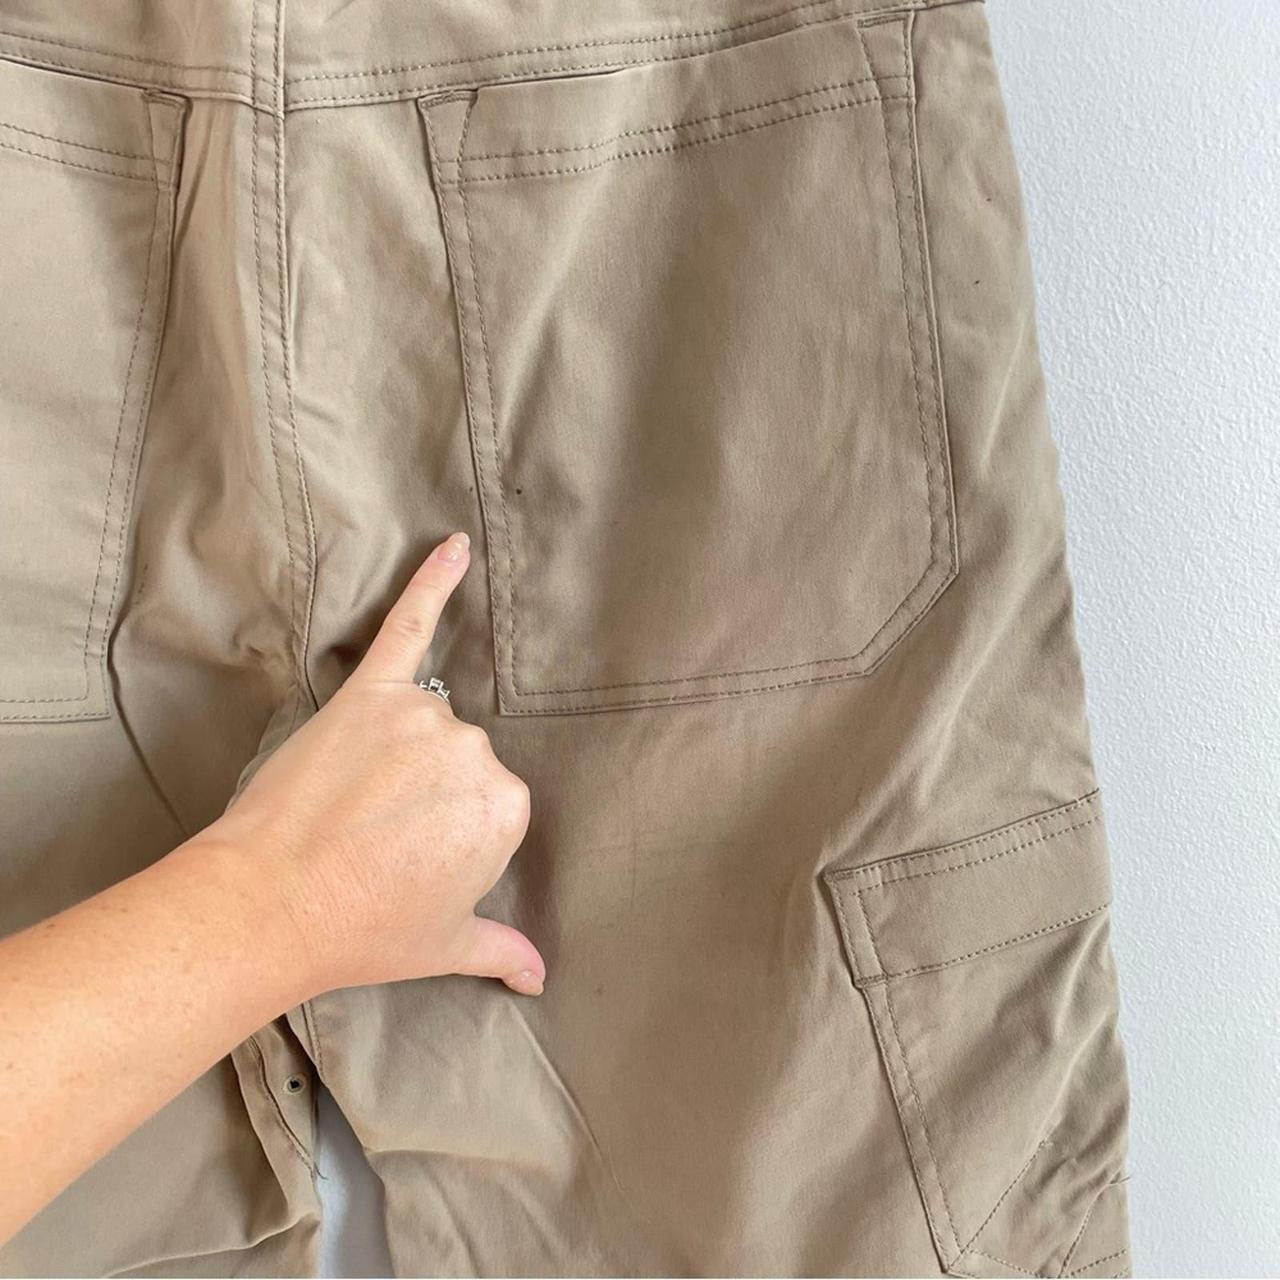 PrAna Zion khaki stretch cargo pants perfect for - Depop